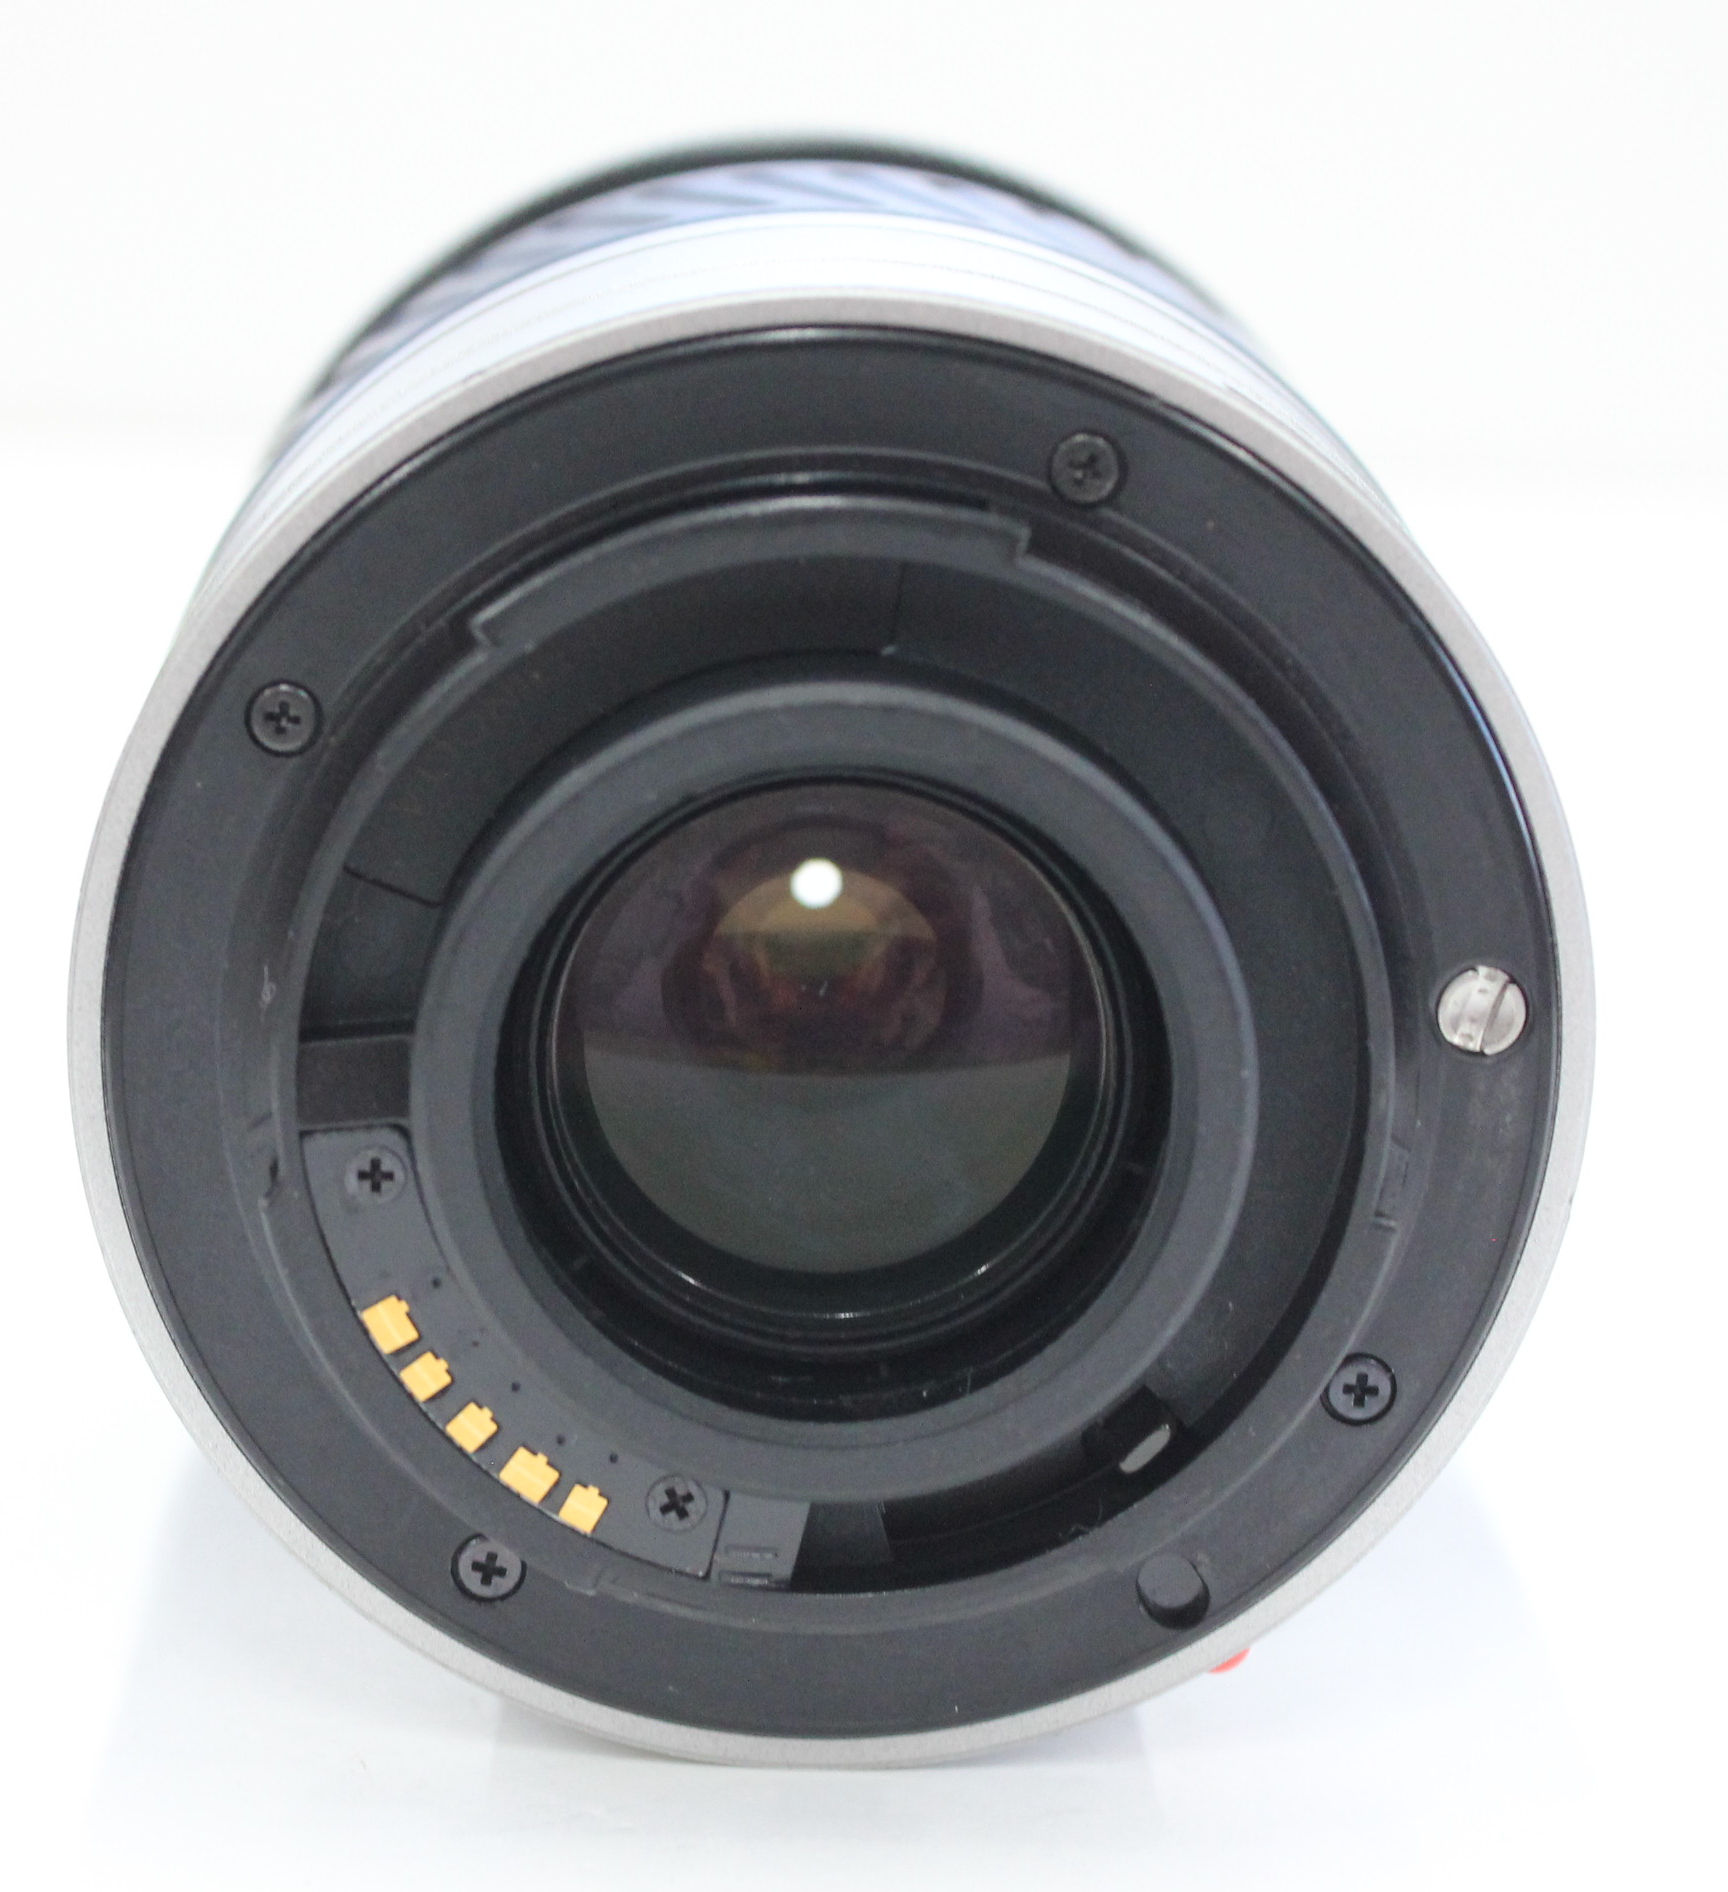  MINOLTA AF ZOOM 28-80mm F/3.5-5.6 A-Mount Lens for Minolta or Sony Photo 3